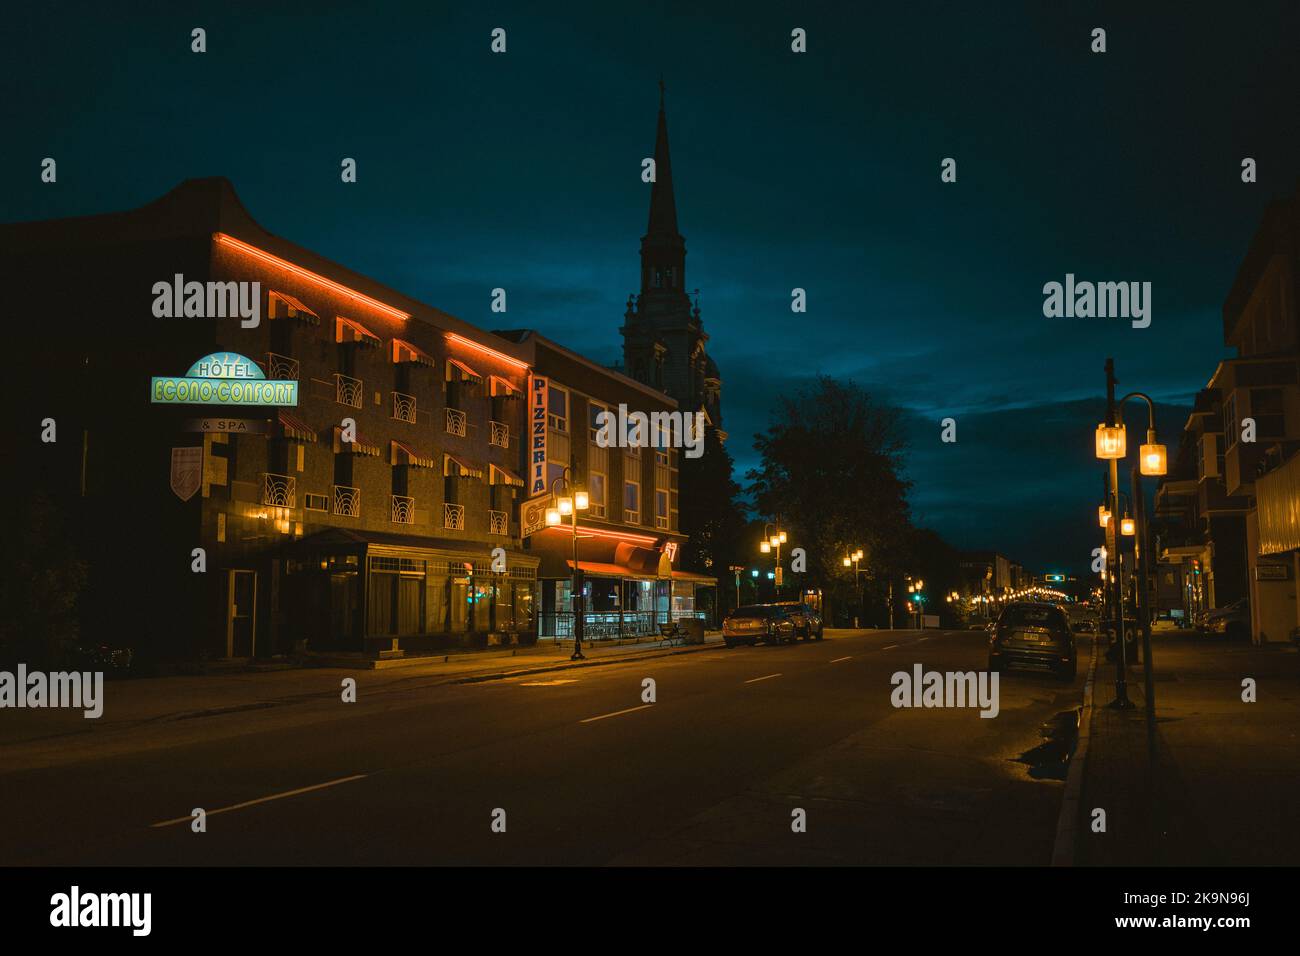 Street scene at night, Shawinigan, Quebec, Canada Stock Photo